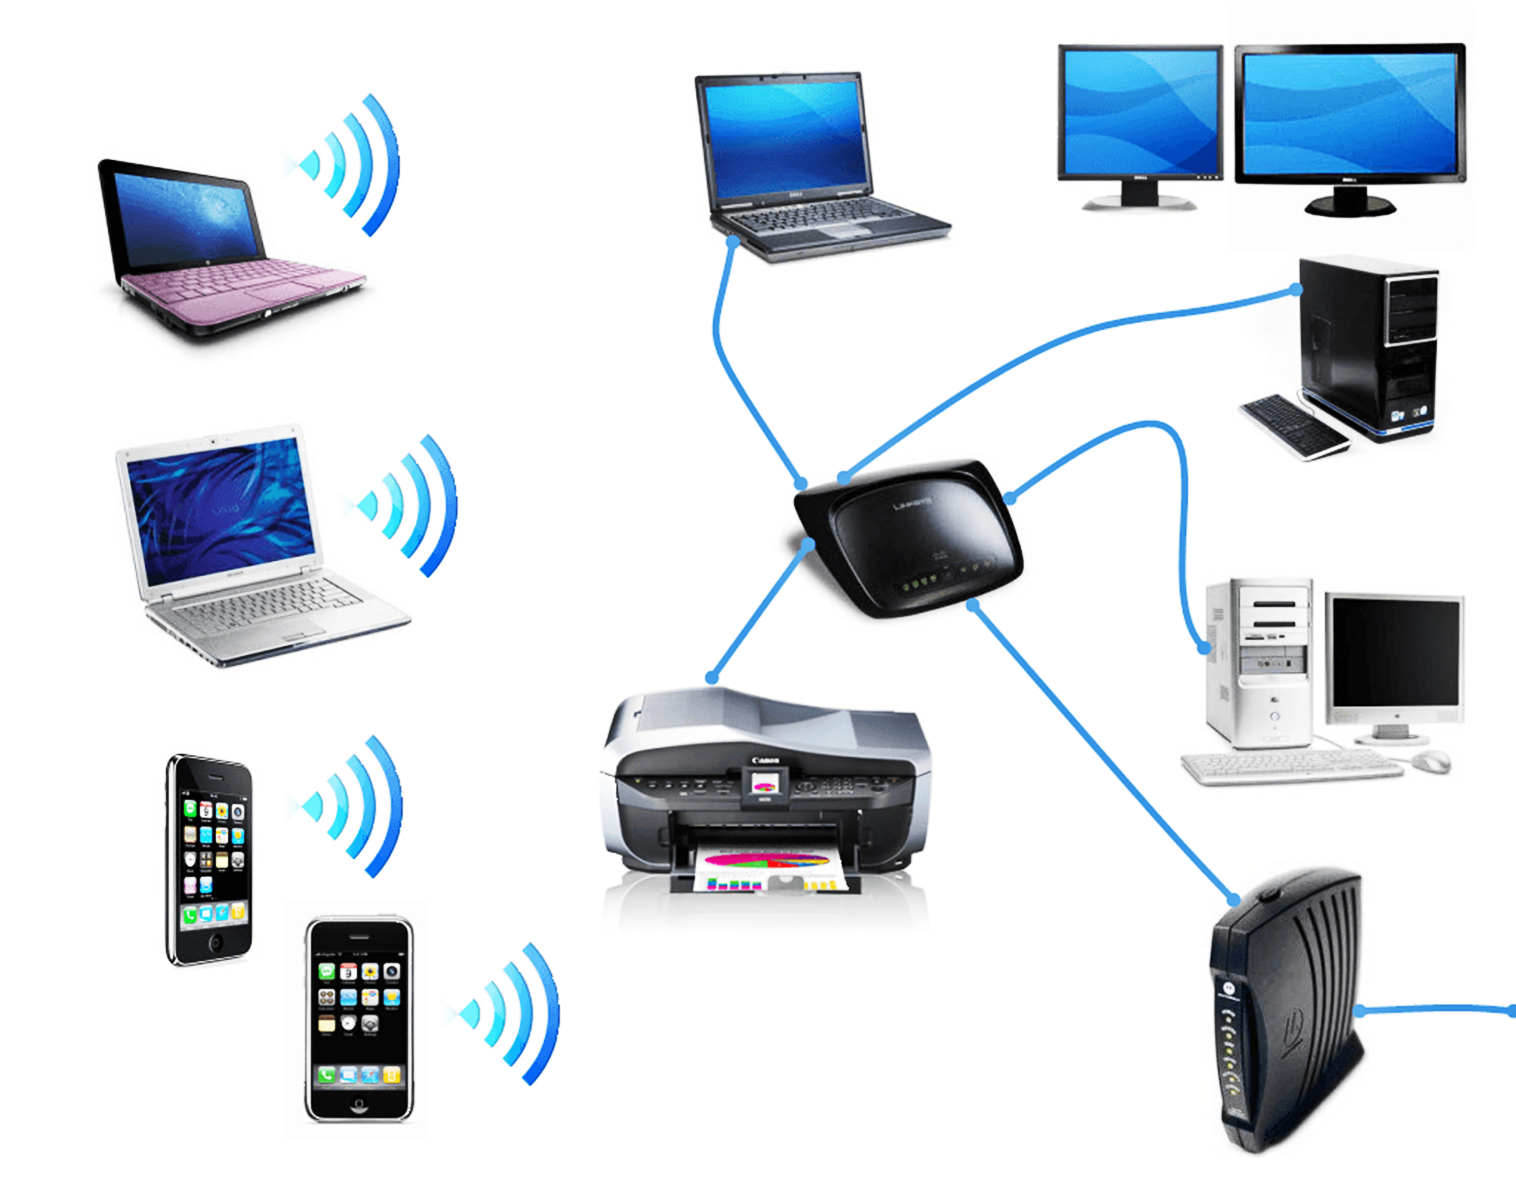 Wired Vs. Wireless Networking